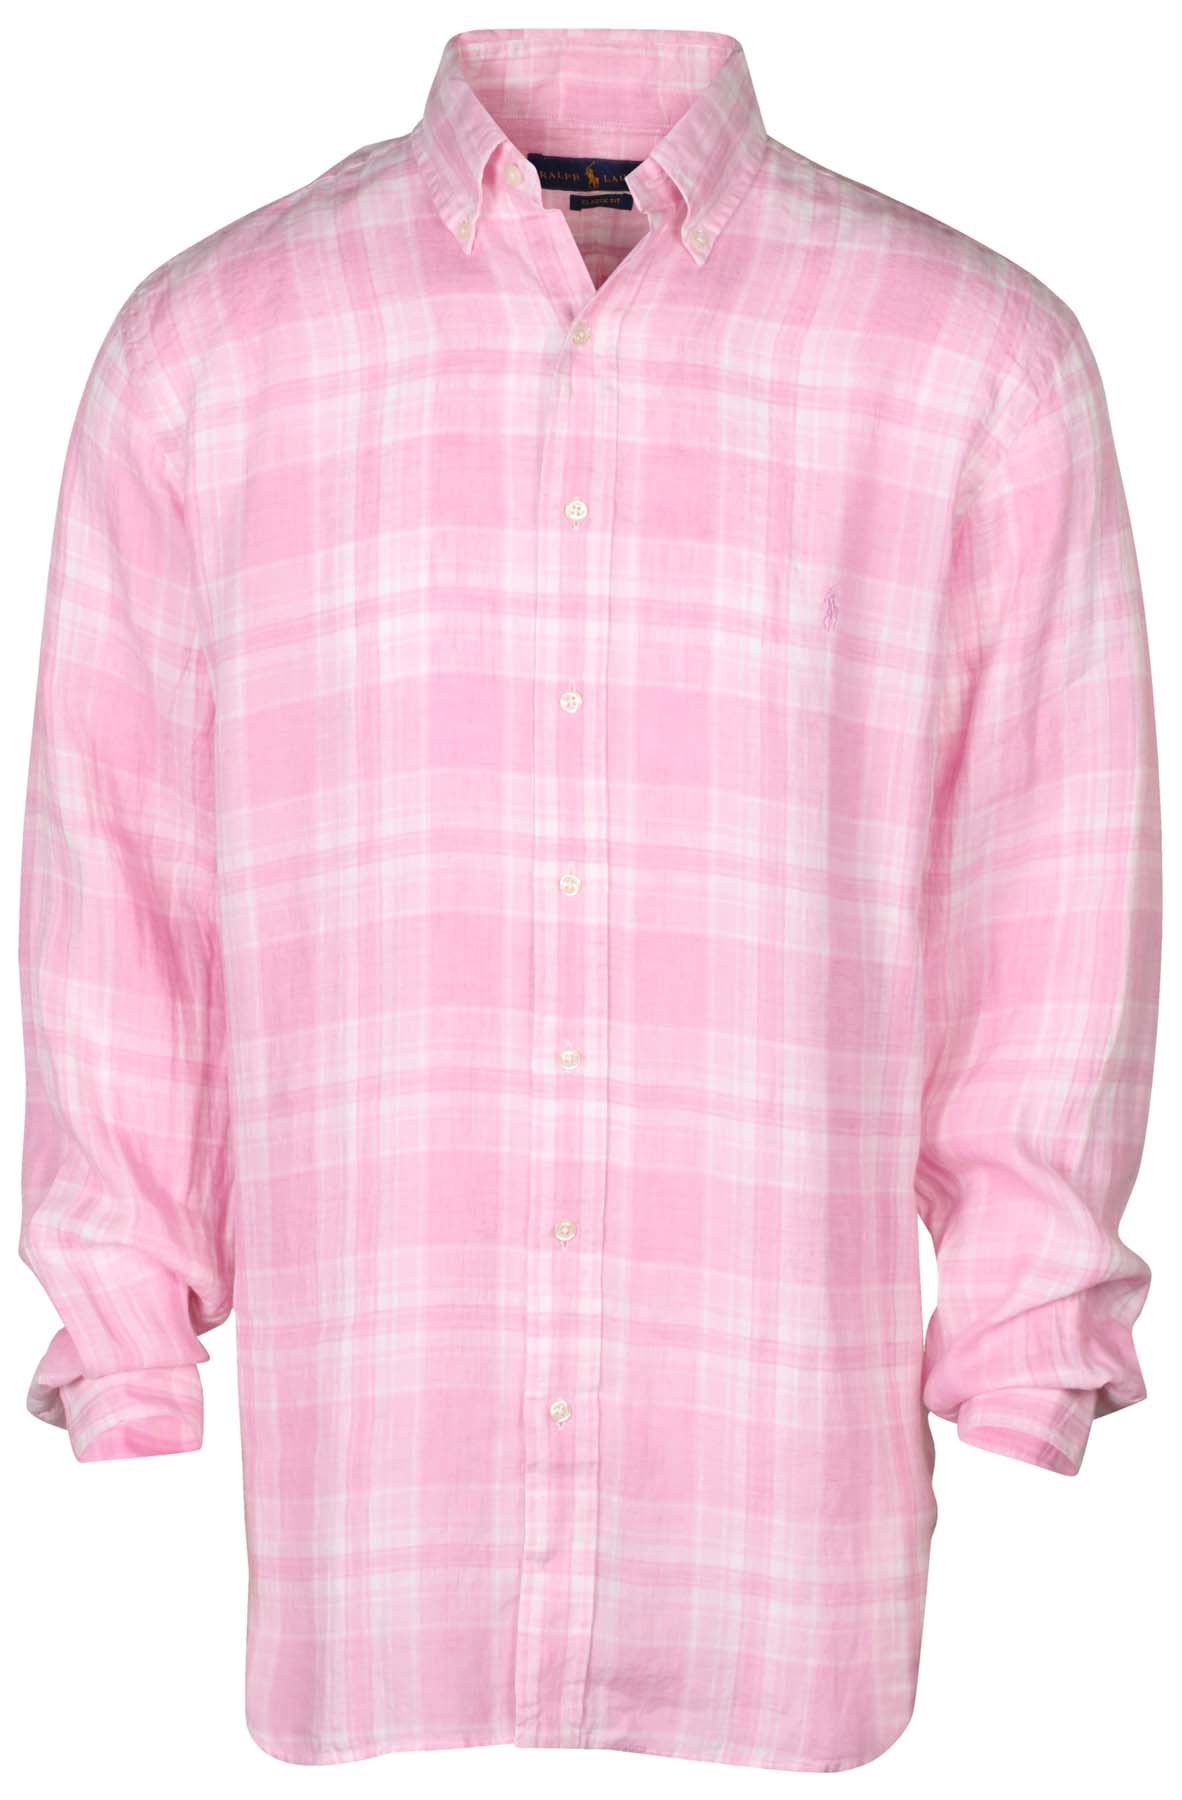 RL Men's Big and Tall Linen Plaid Classic Fit Button Down Shirt | eBay